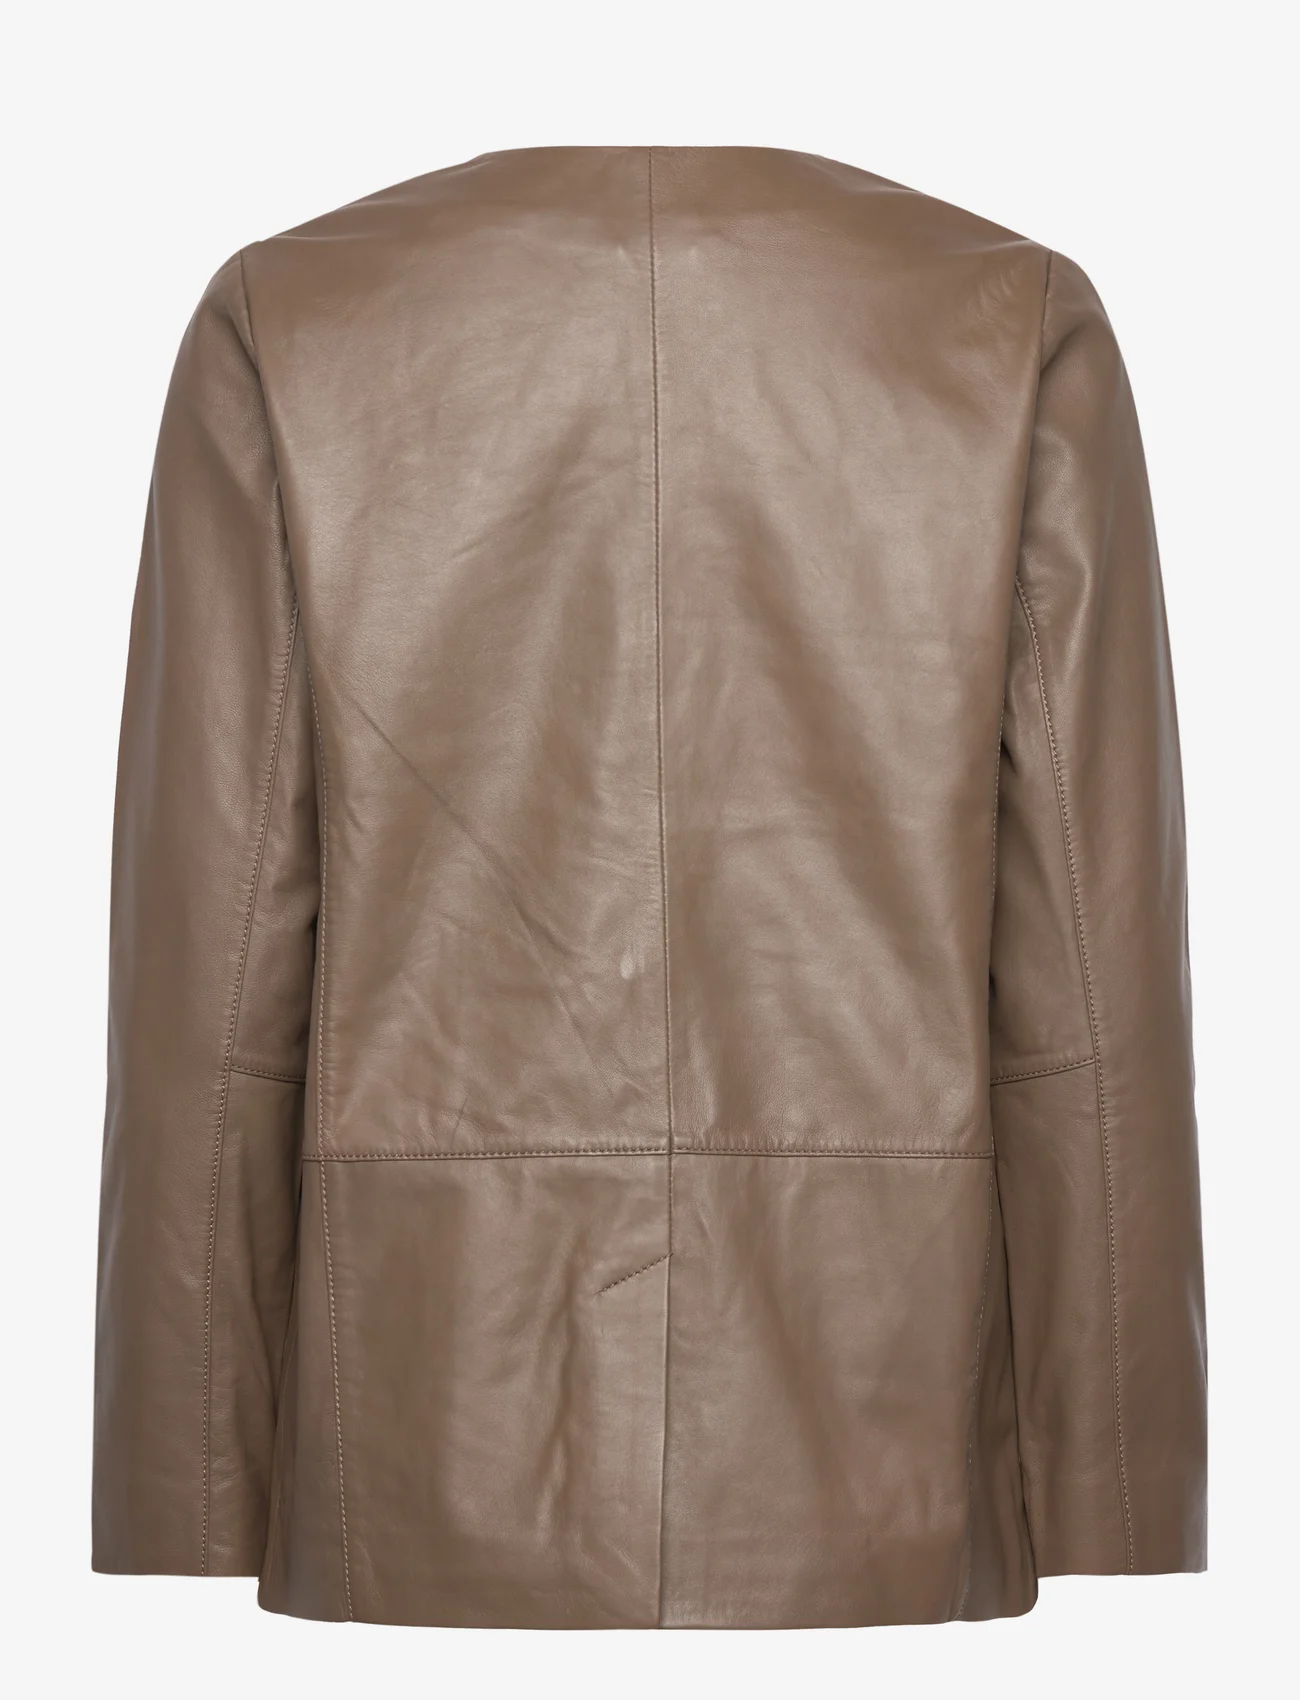 Rosemunde - Leather jacket - kevättakit - dark portobello brown - 1